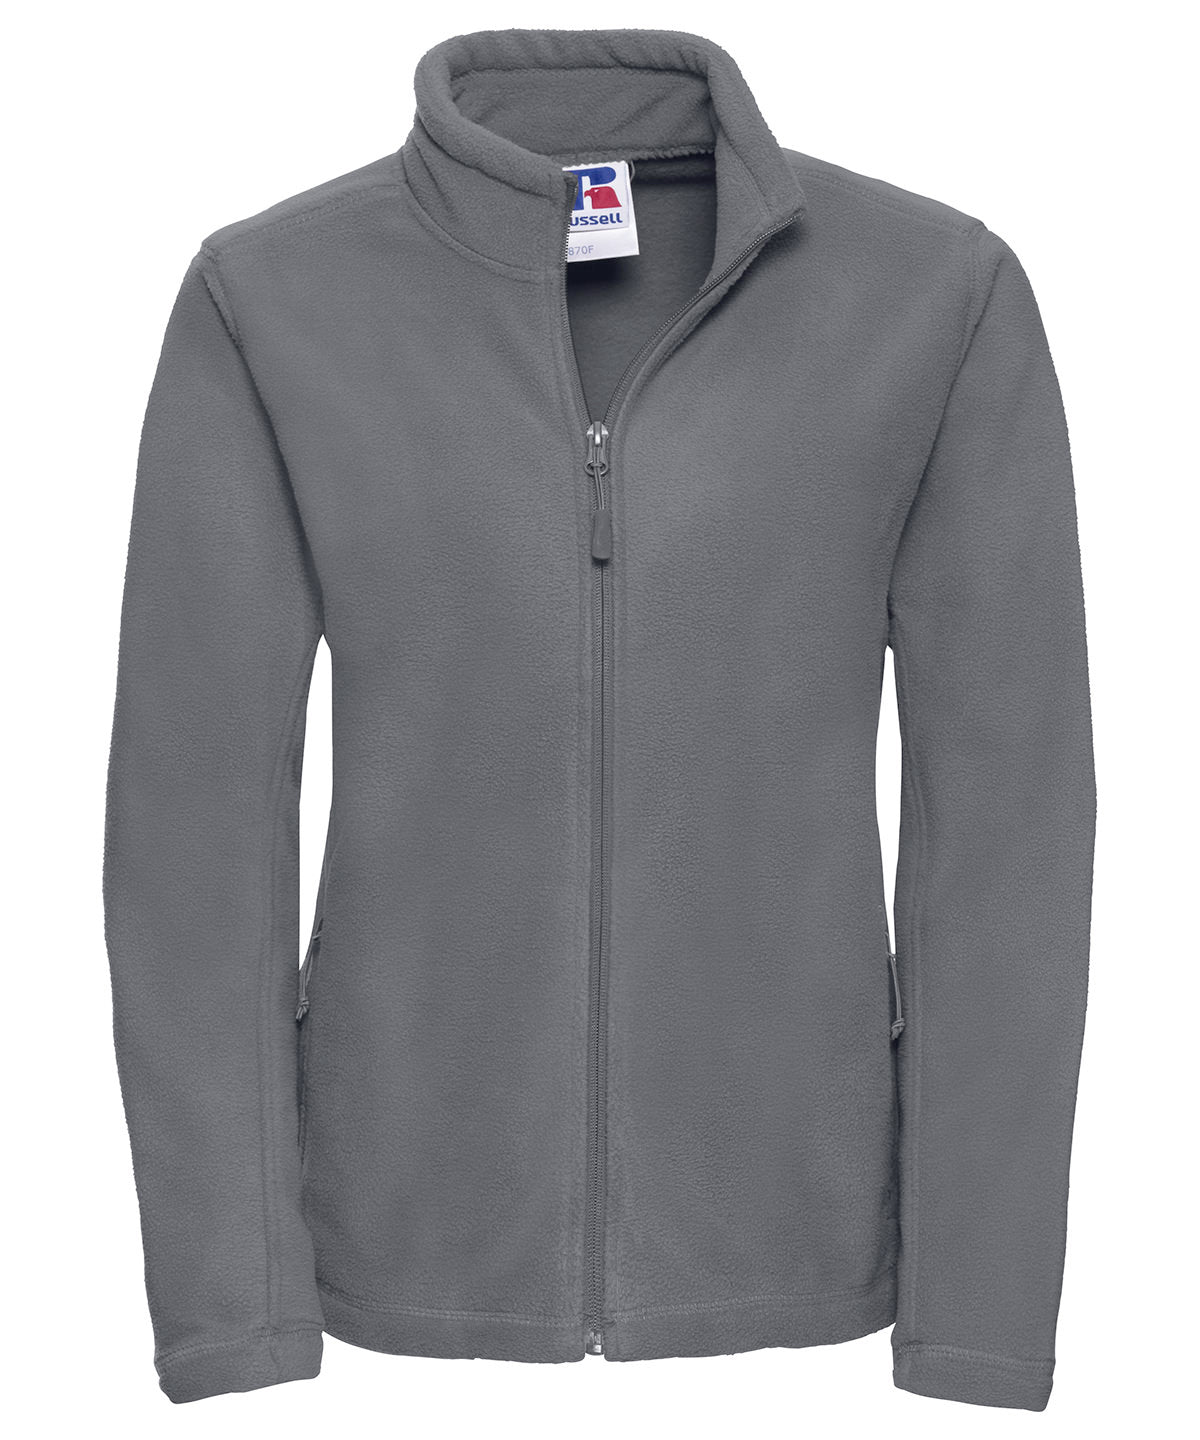 Personalised Jackets - Black Russell Europe Women's full-zip outdoor fleece